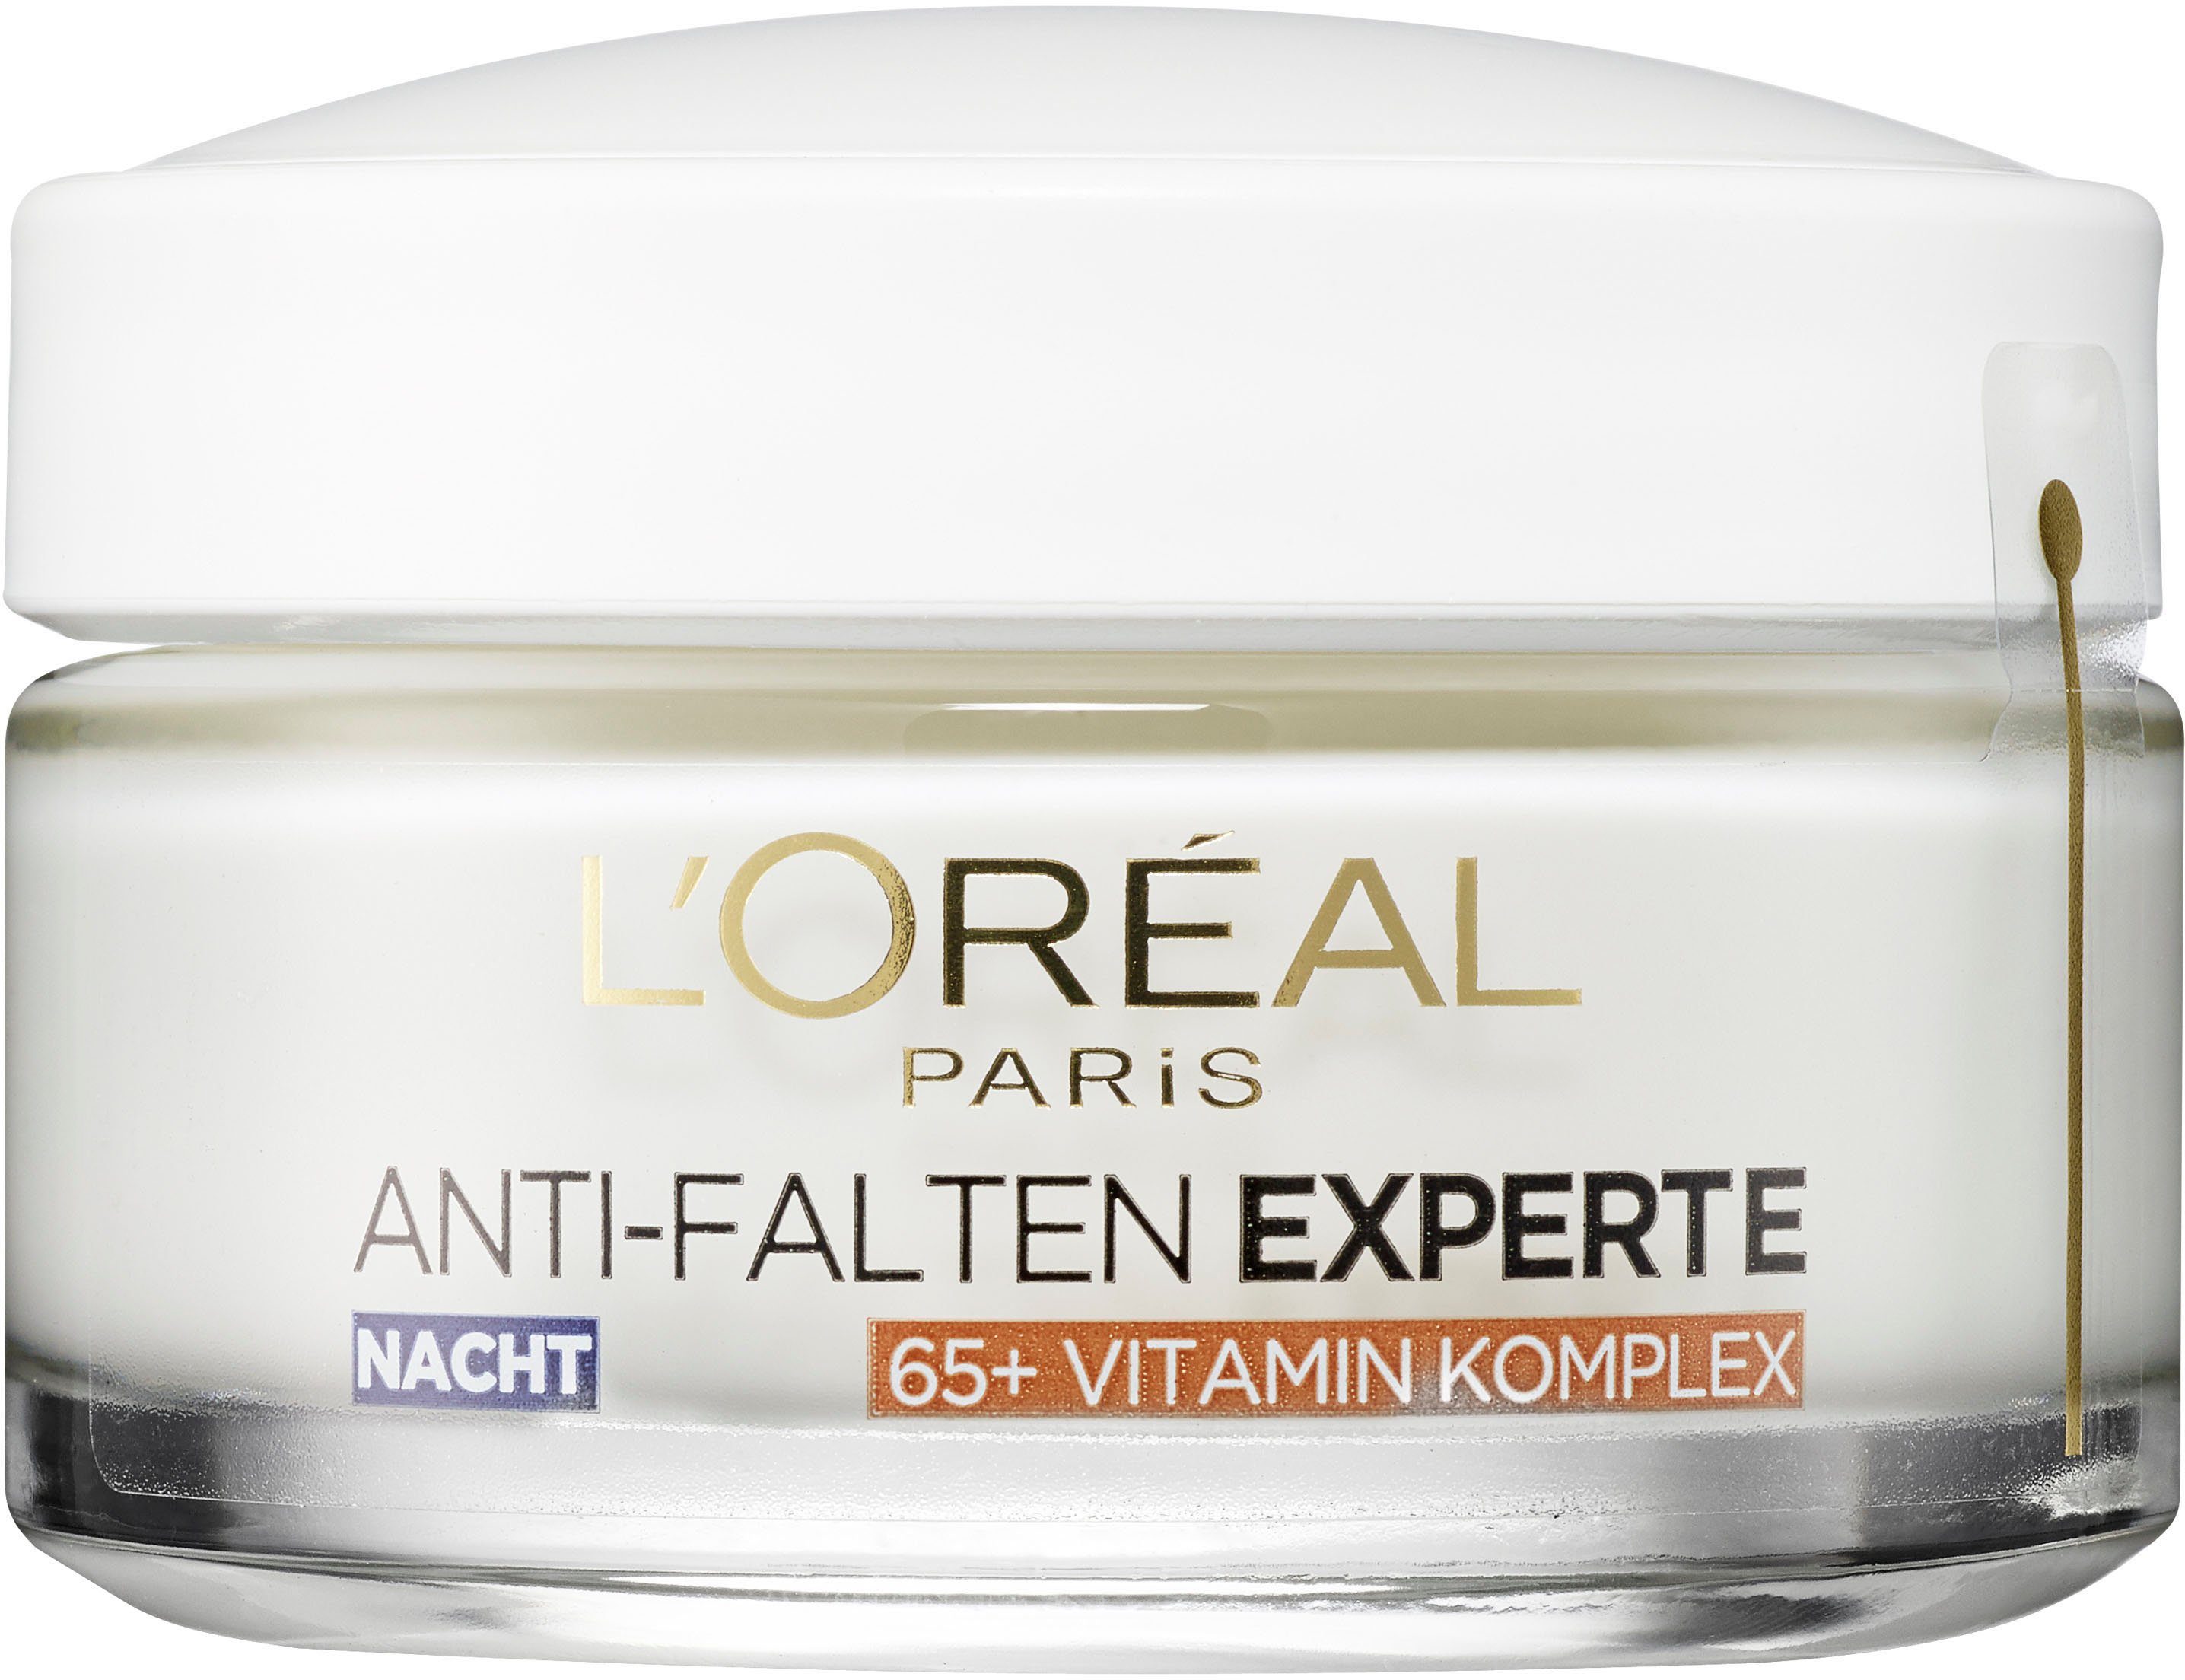 Haut Experte für Anti-Aging-Creme L'ORÉAL PARIS Nacht Feuchtigkeitspflege Anti-Falten 65+